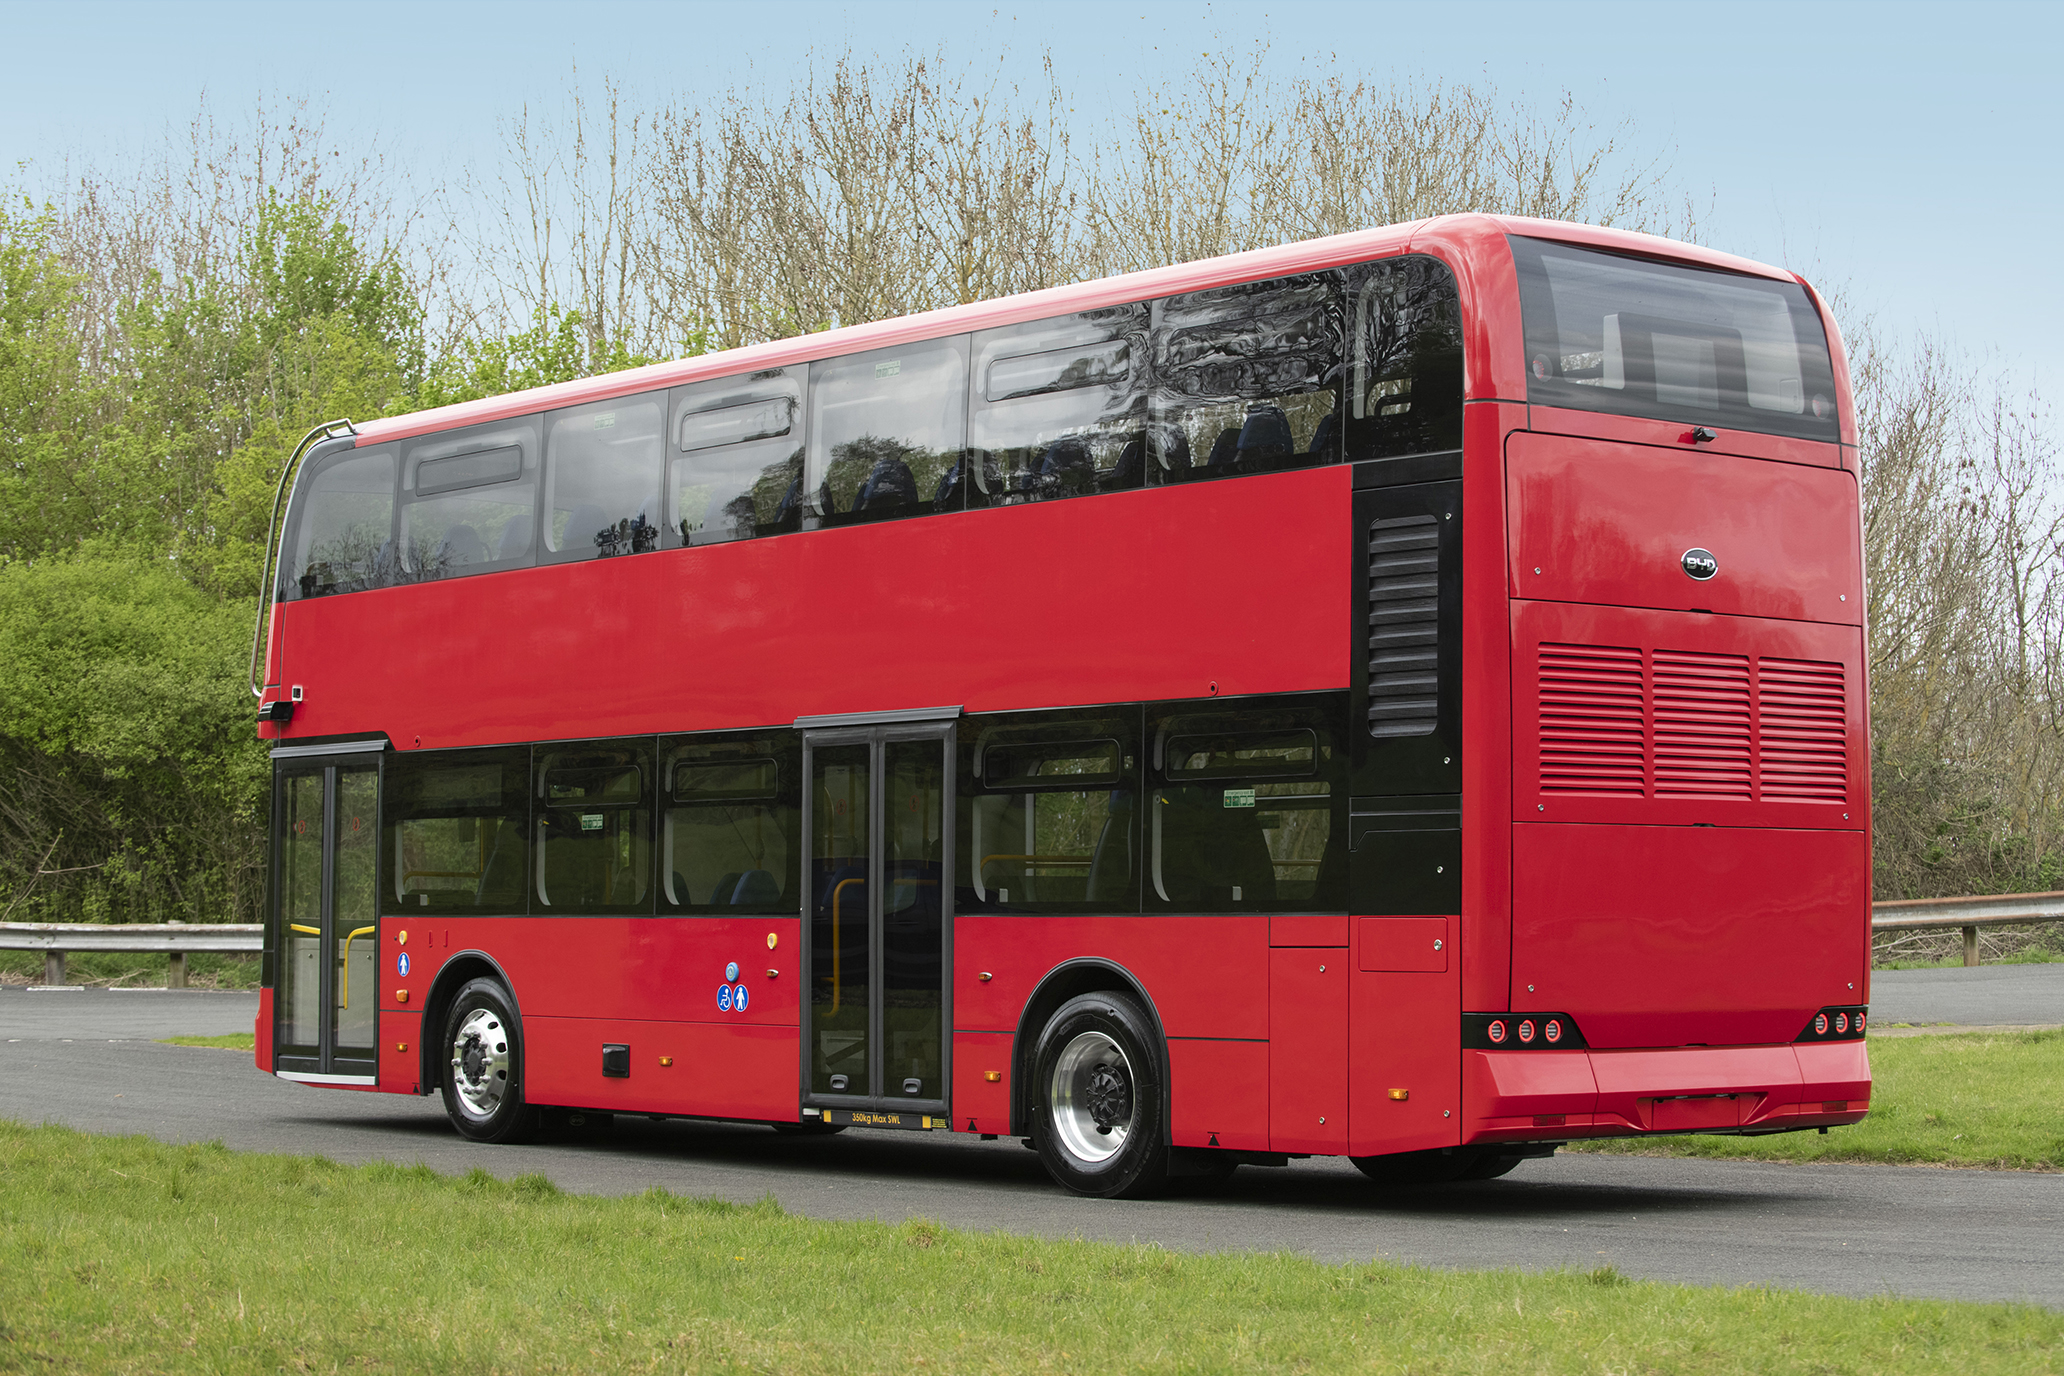 double decker bus tour in london